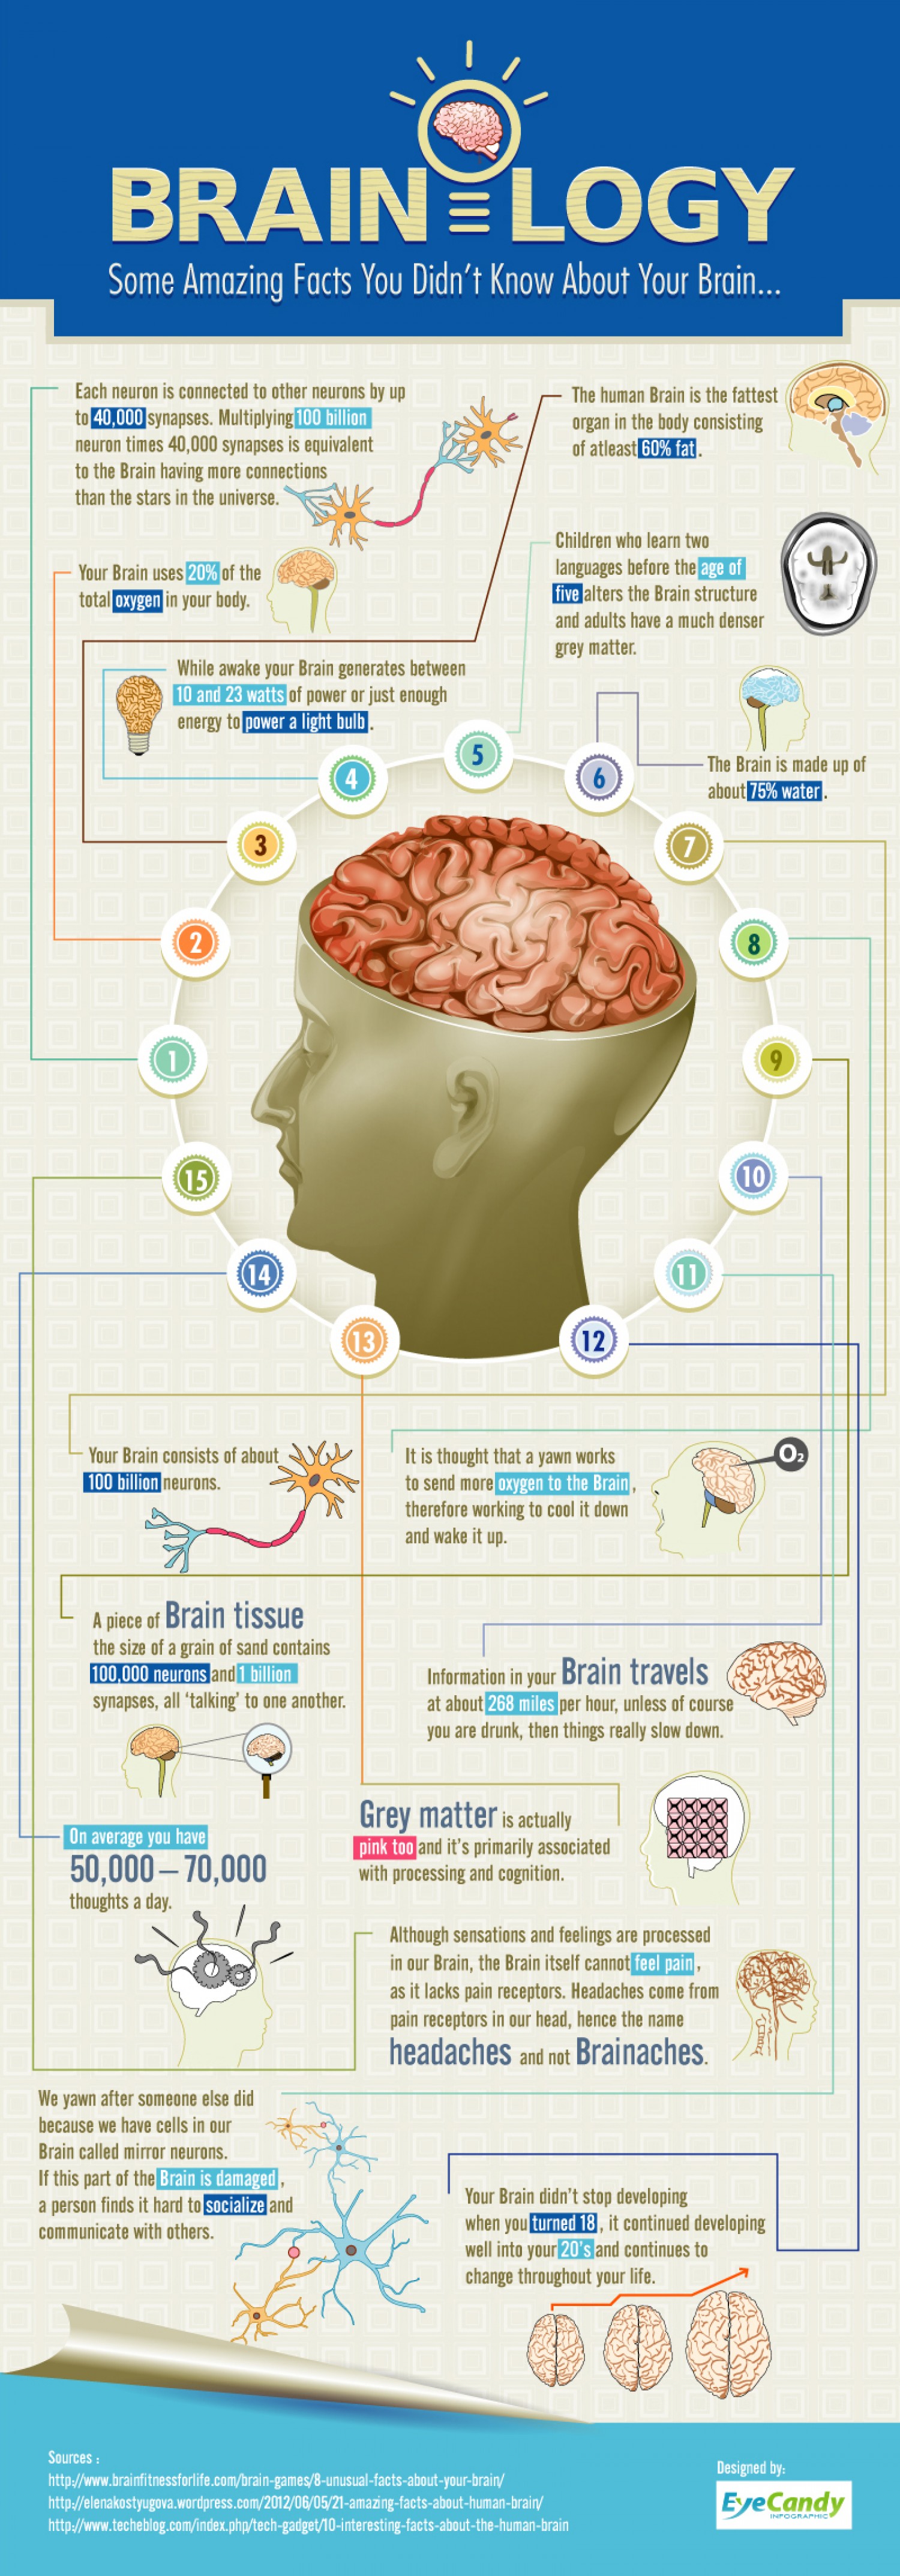 brain health research articles